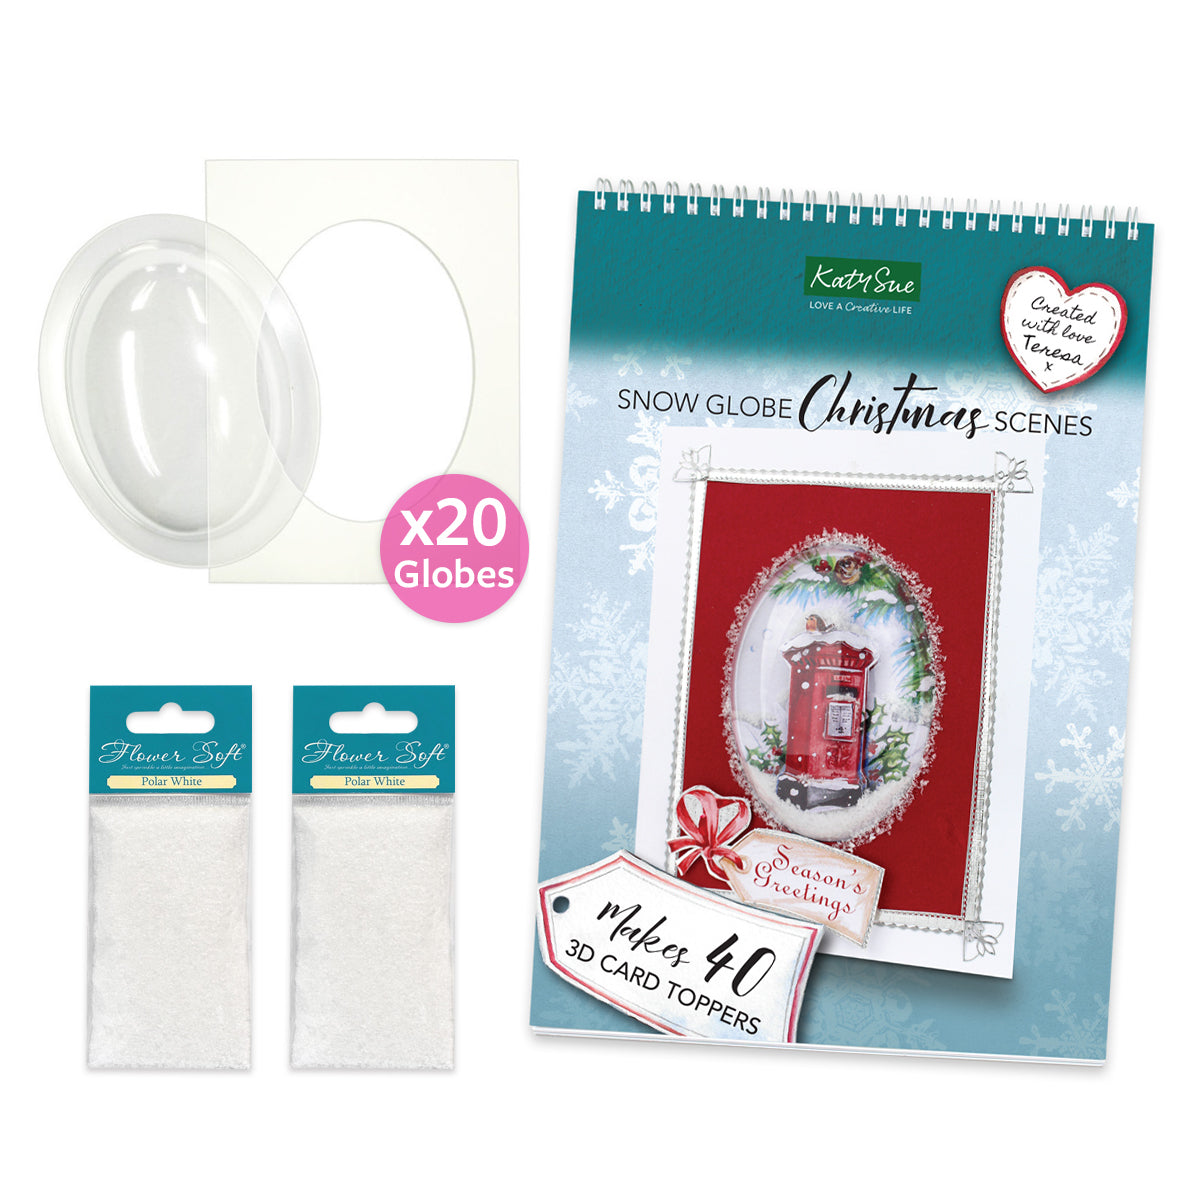 Snow Globe Christmas Scenes Kit: Flower Soft, Globes & Paper Craft Pad (Not Die Cut)